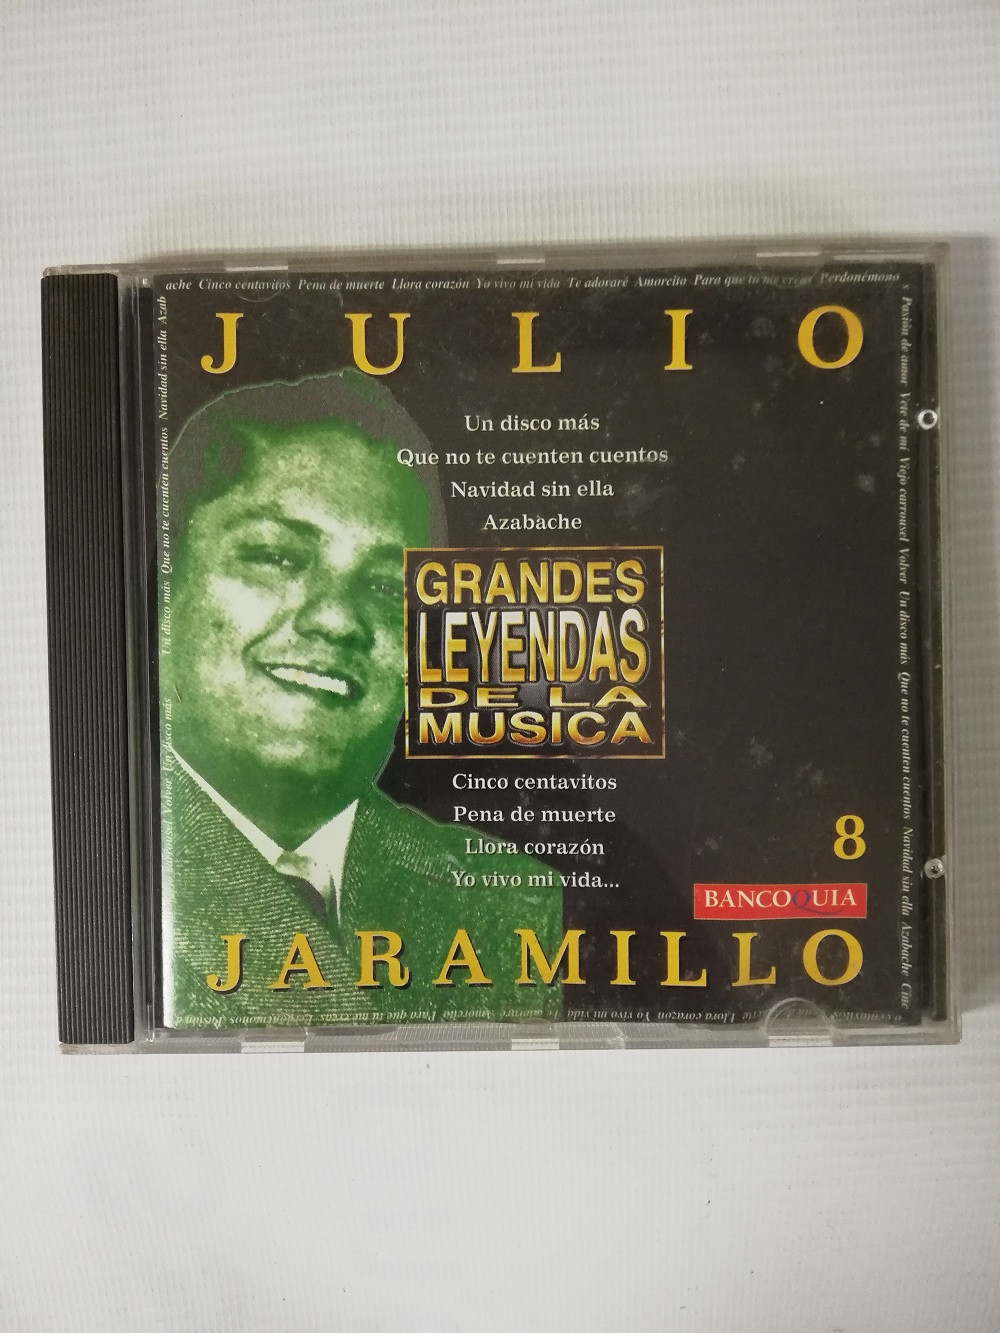 Imagen CD JULIO JARAMILLO - GRANDES LEYENDAS DE LA MÚSICA 1